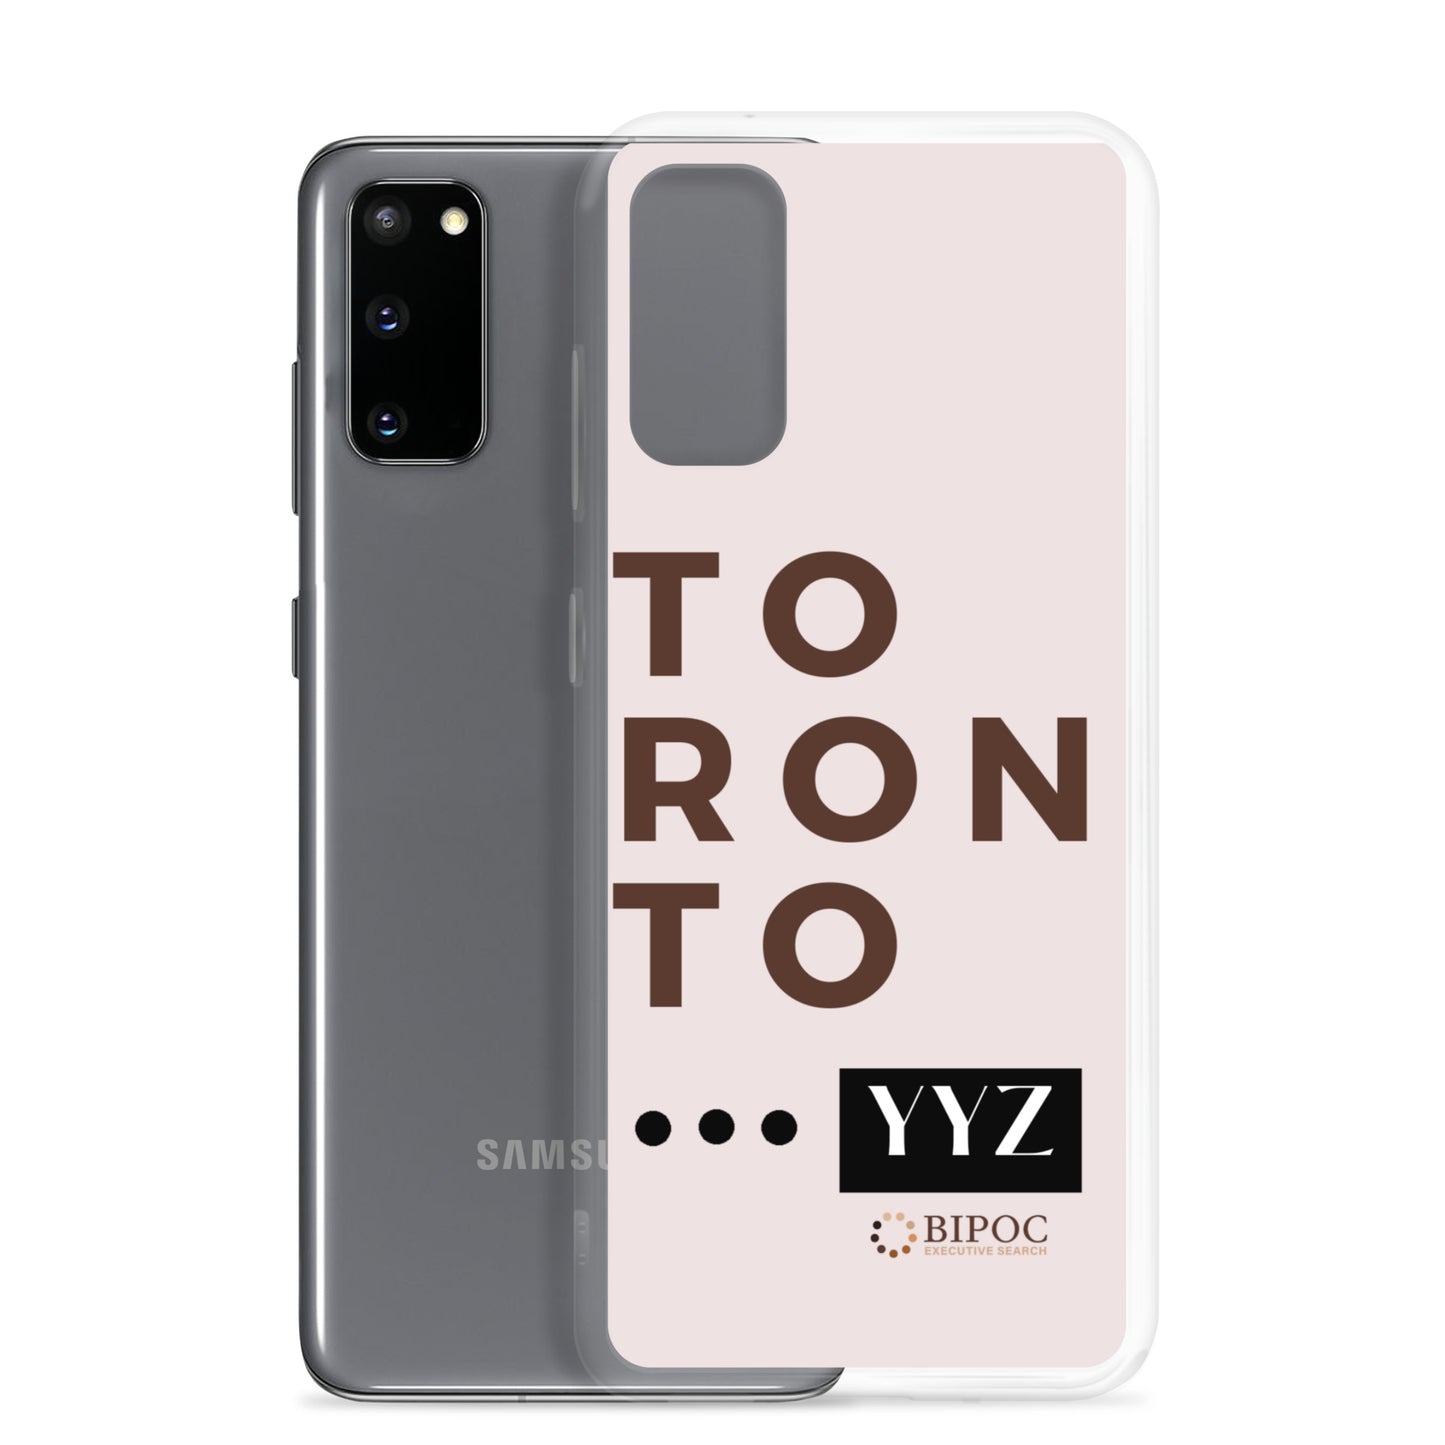 Toronto Samsung Case